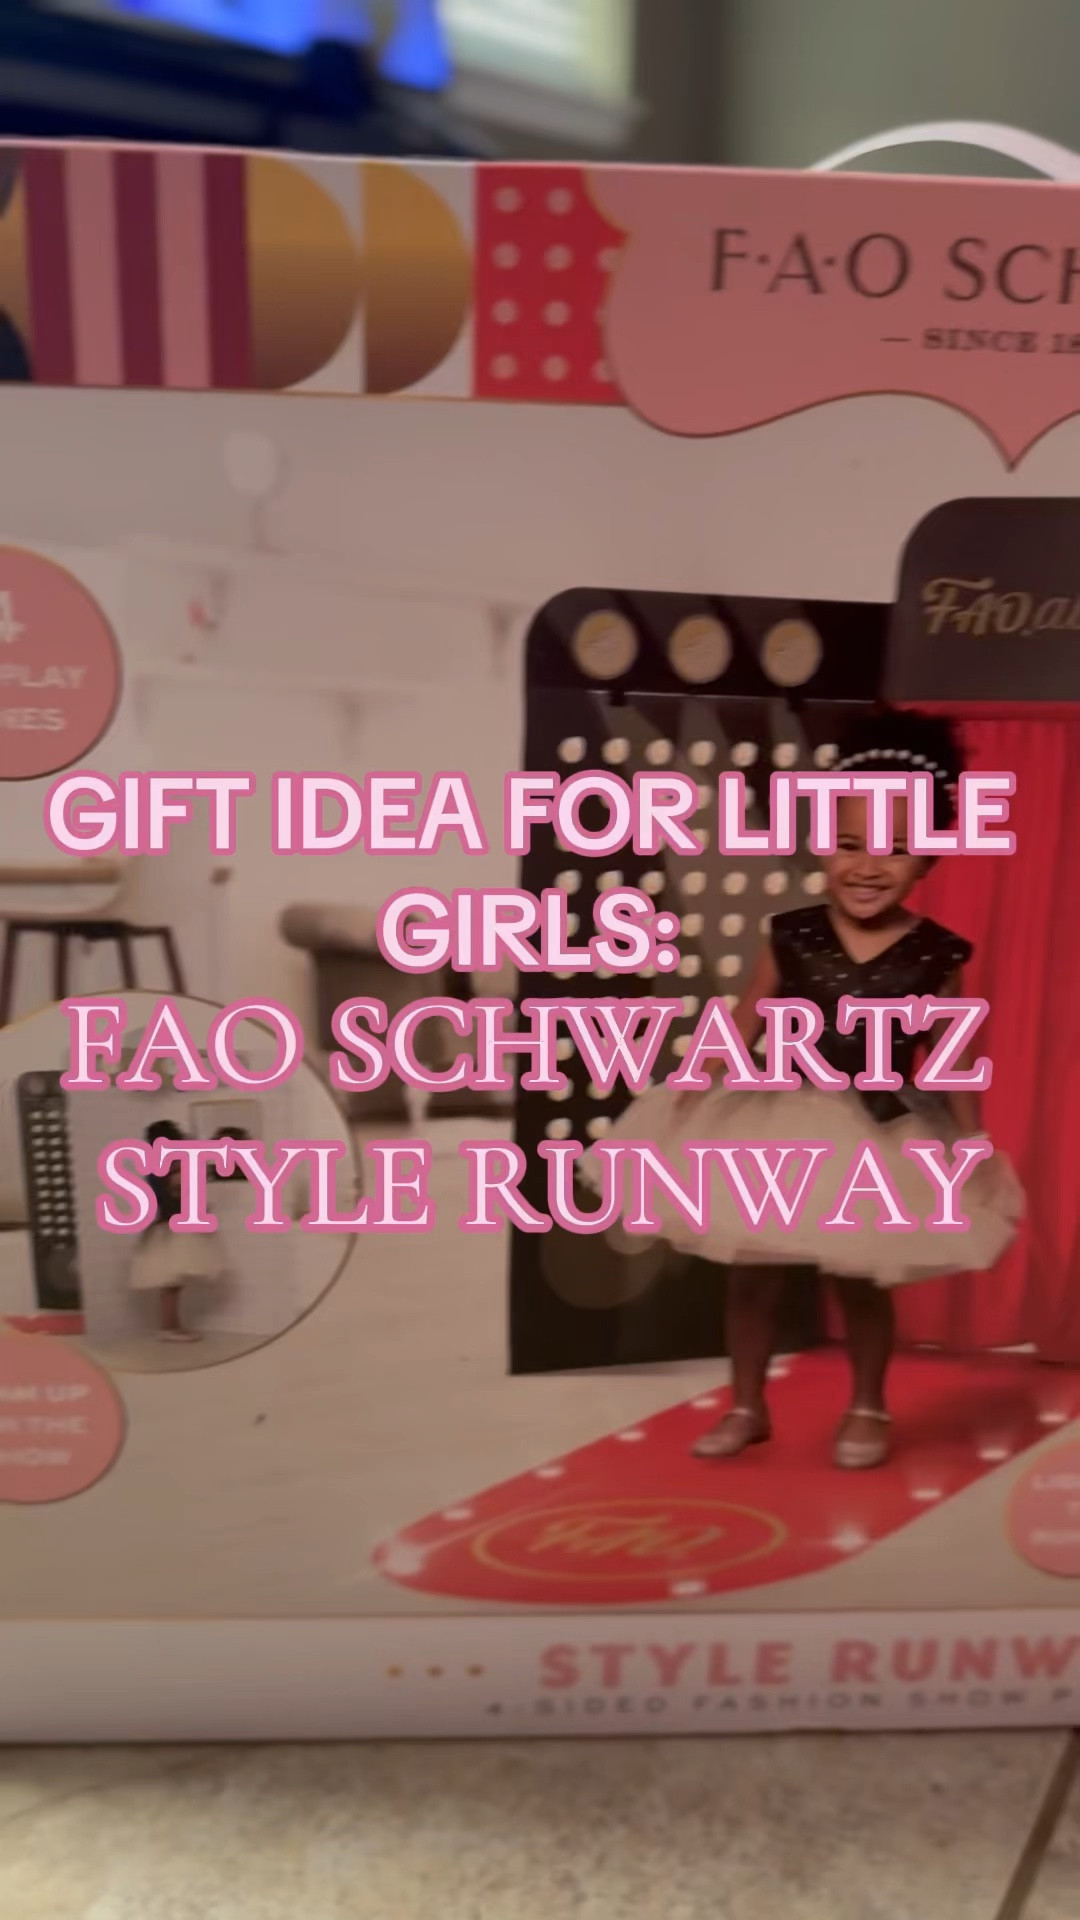 FAO Schwarz Style Runway 4-Sided Fashion Show Playset